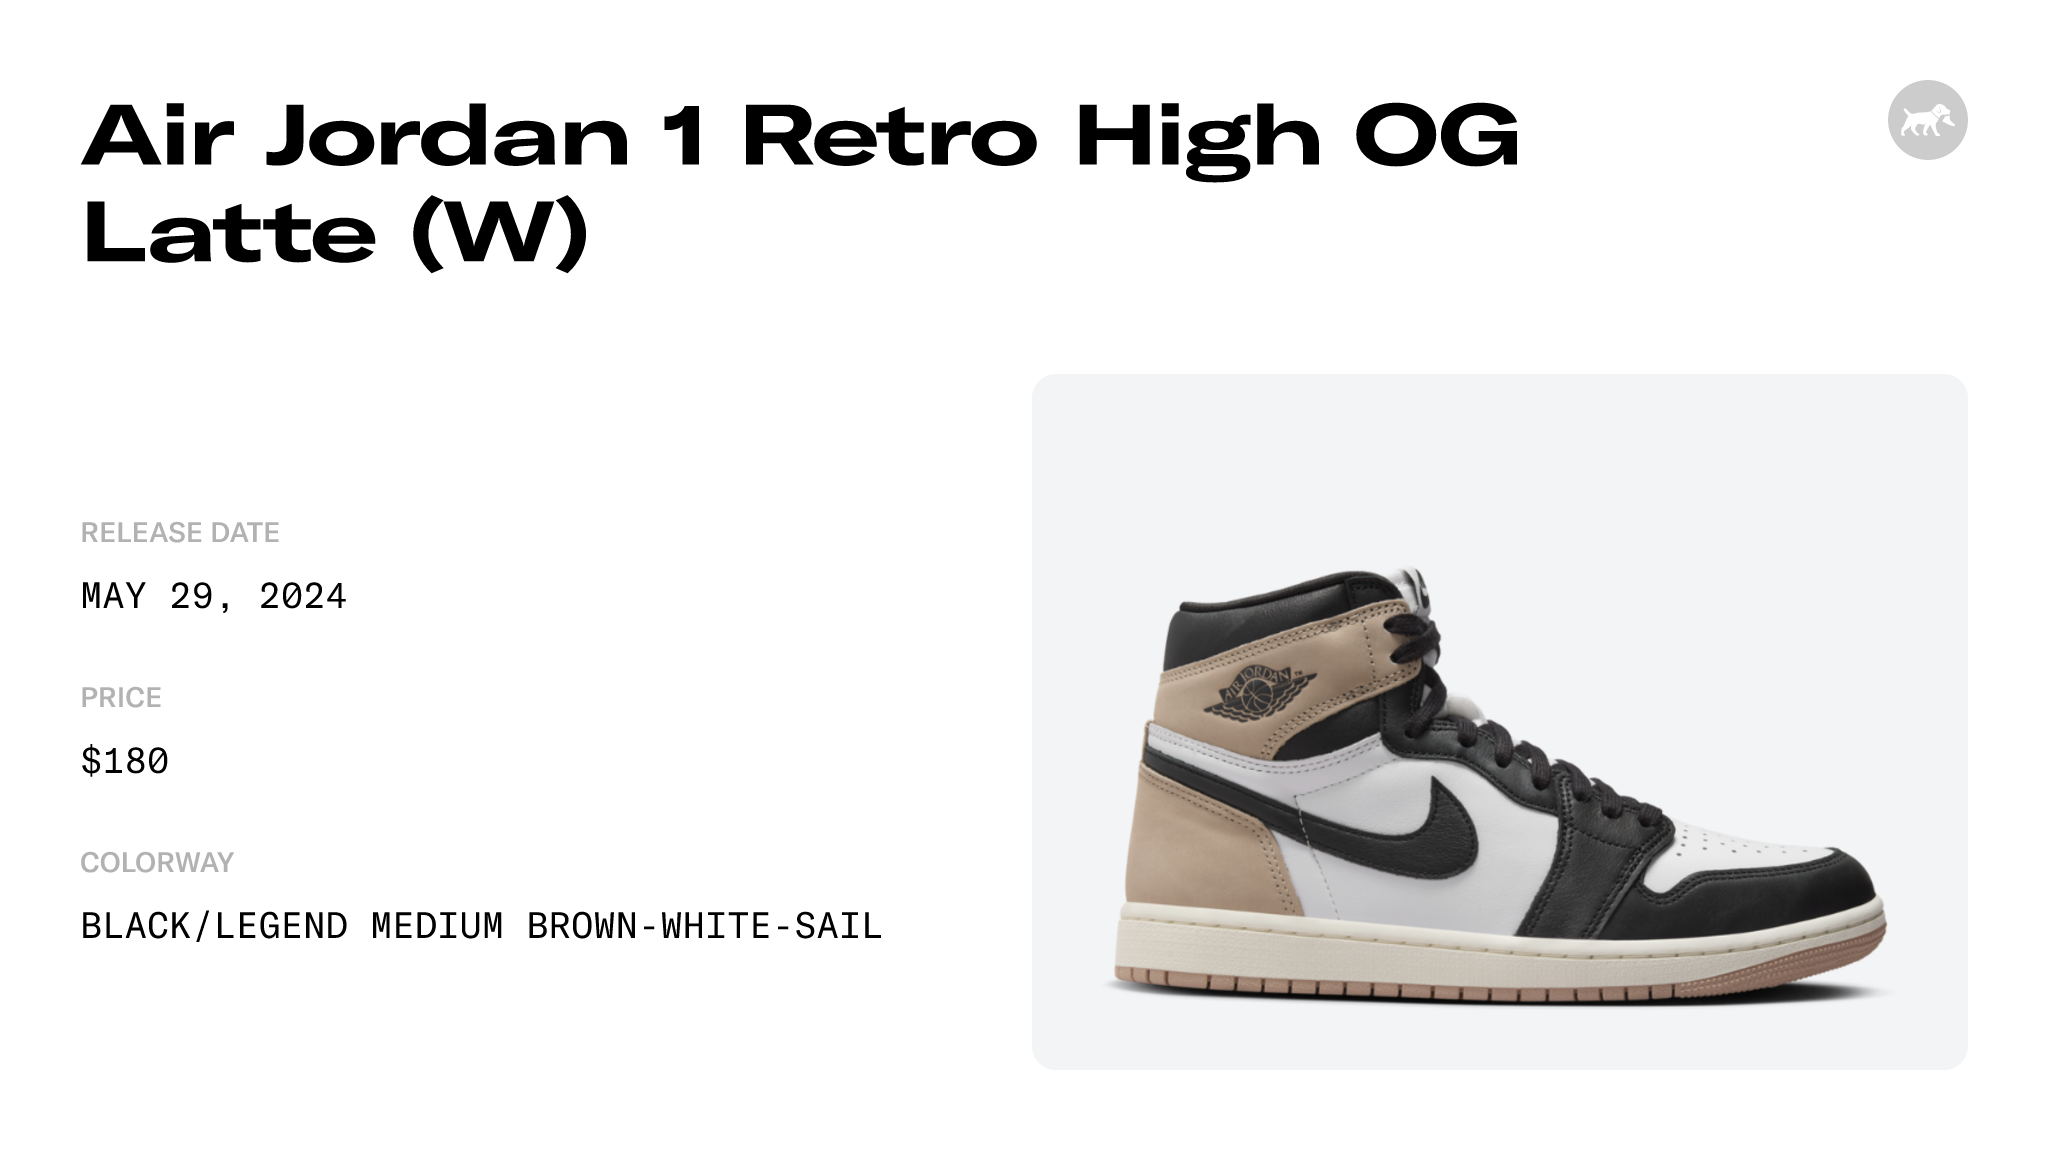 Air Jordan 1 Retro High OG Latte (W) - FD2596-021 Raffles and Release Date